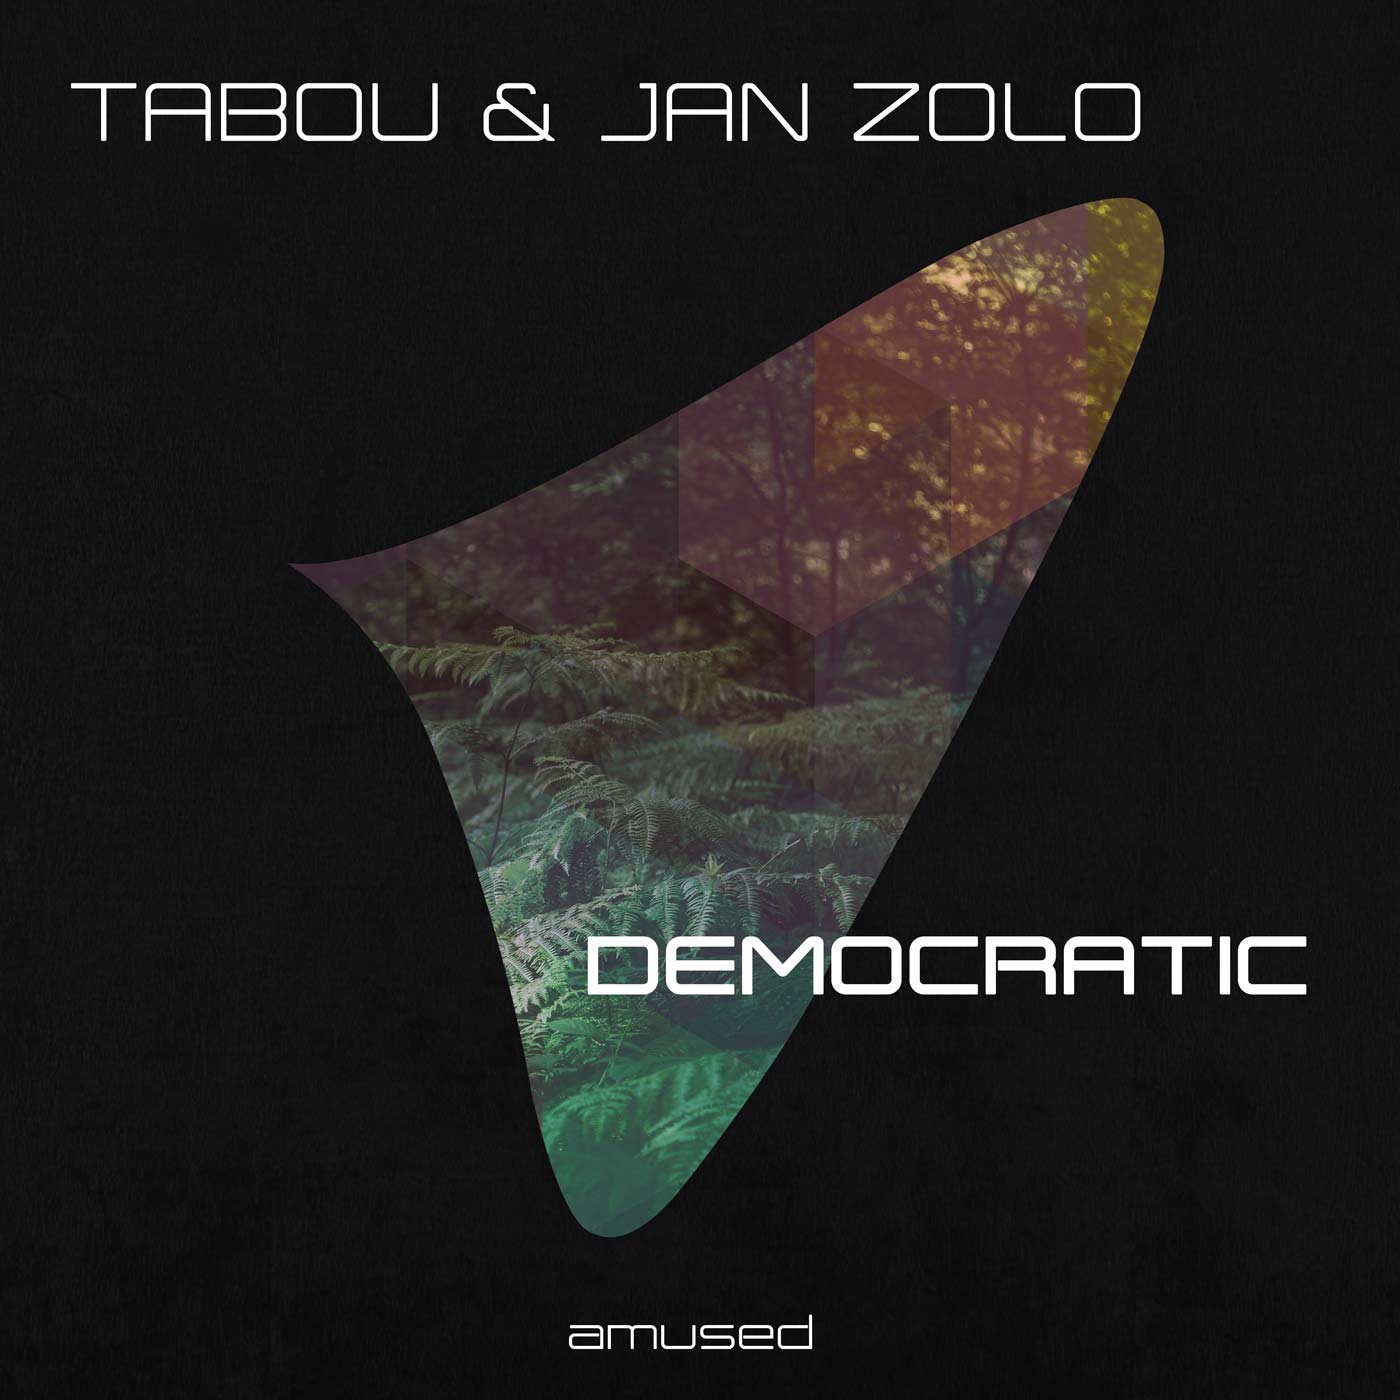 TABOU & JAN ZOLO democratic